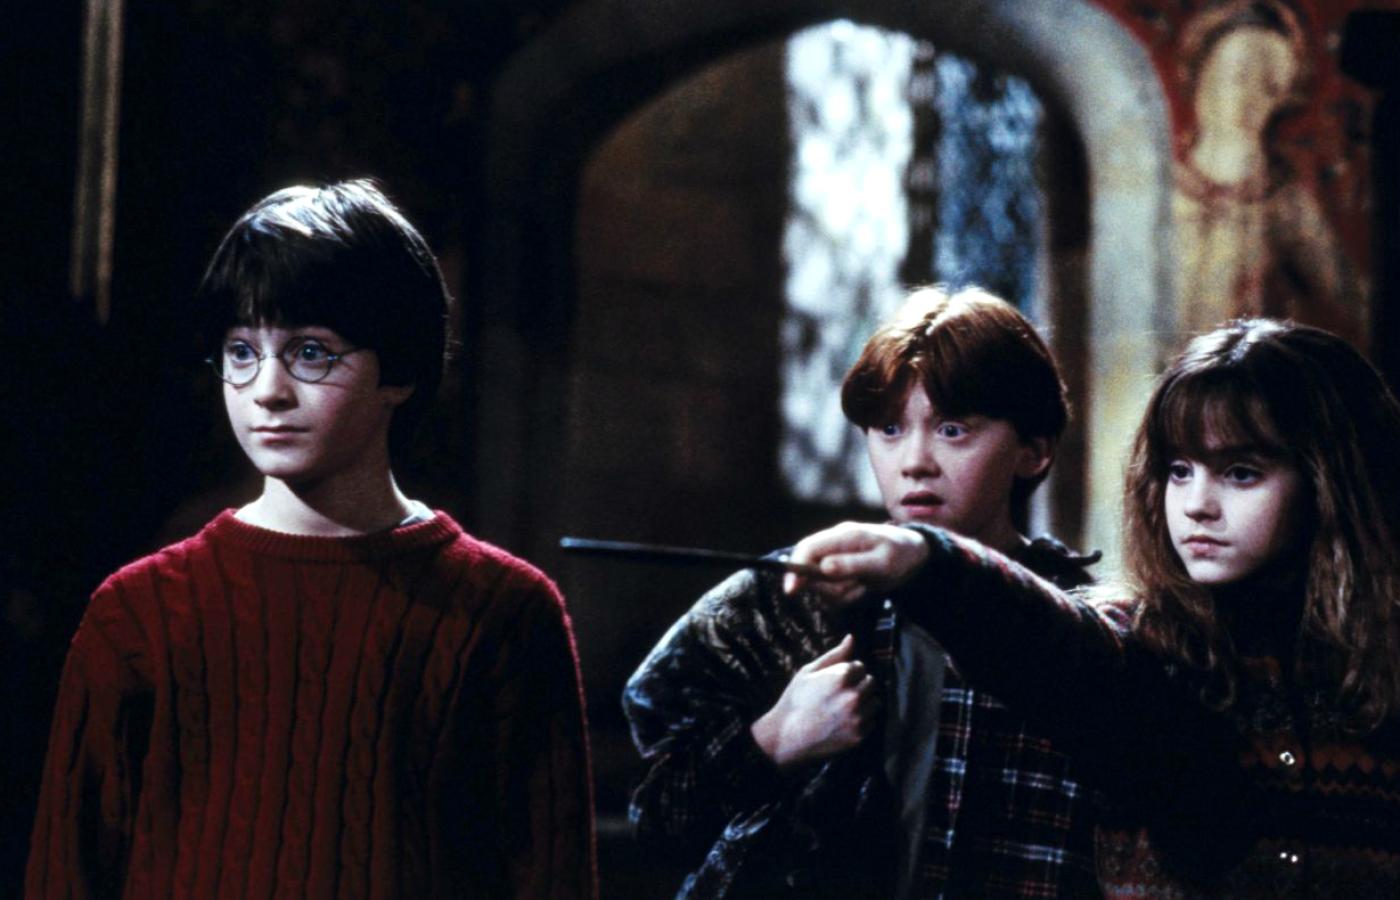 Kadr z filmu „Harry Potter i Kamień filozoficzny”